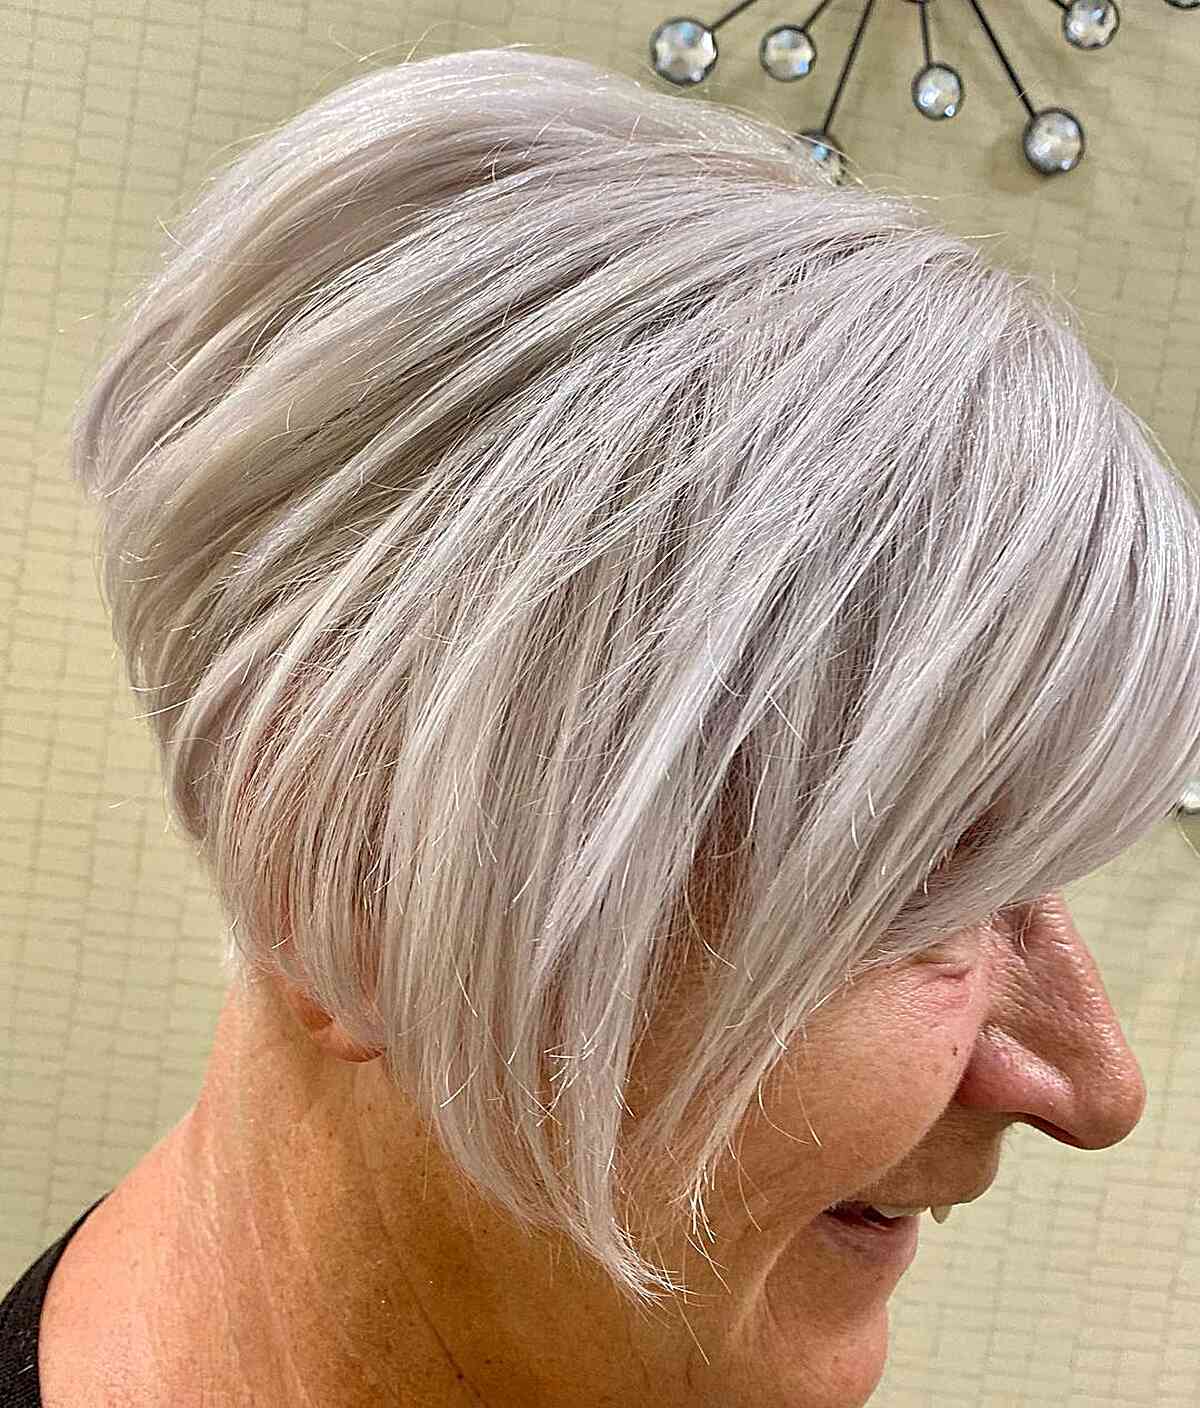 Ear-Length Icy Asymmetric Bob Cut for older women with sass